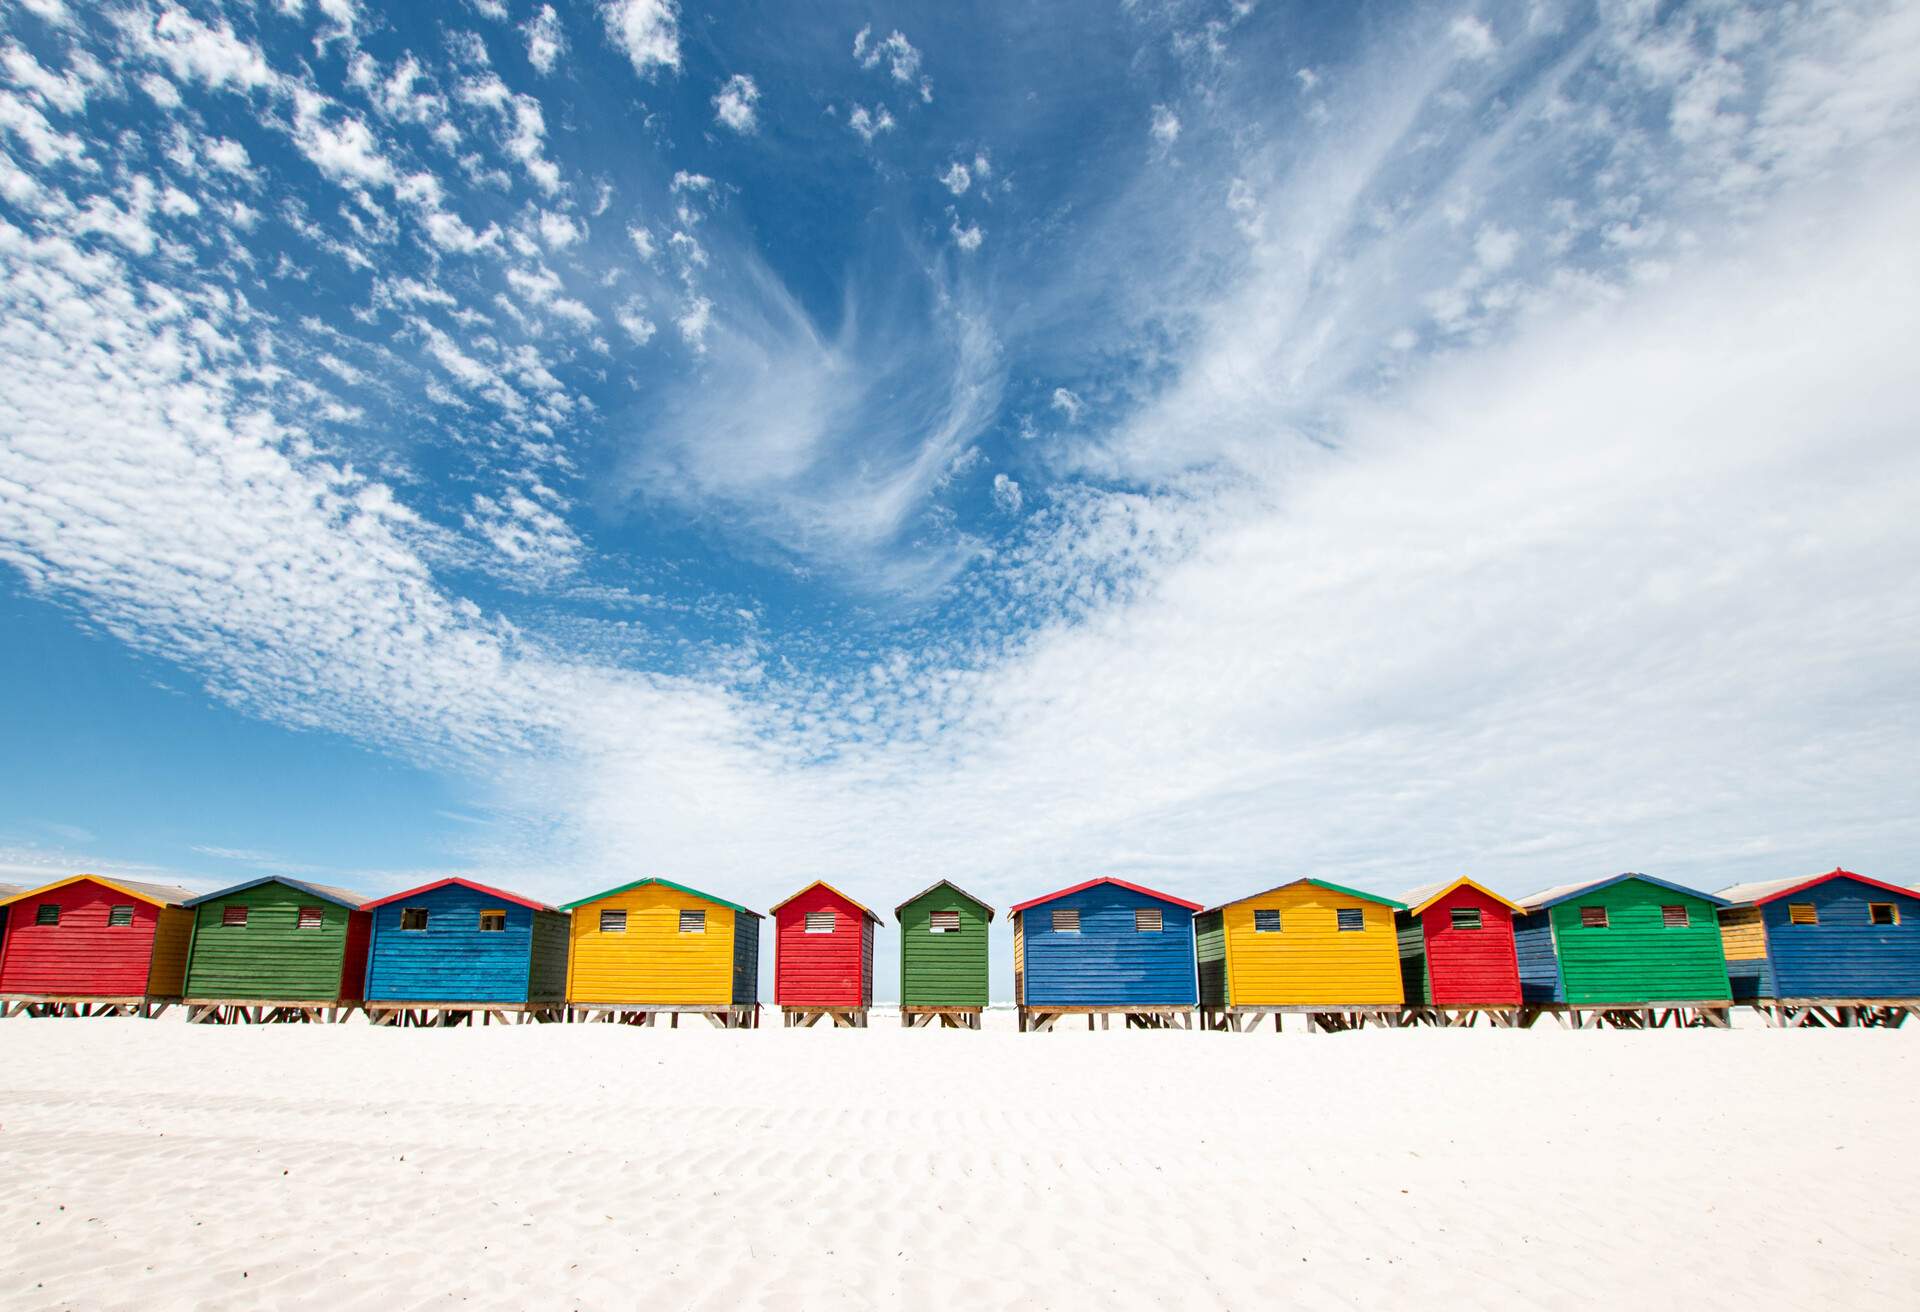 A row of colourful beach huts on a white sand beach under a blue sky.